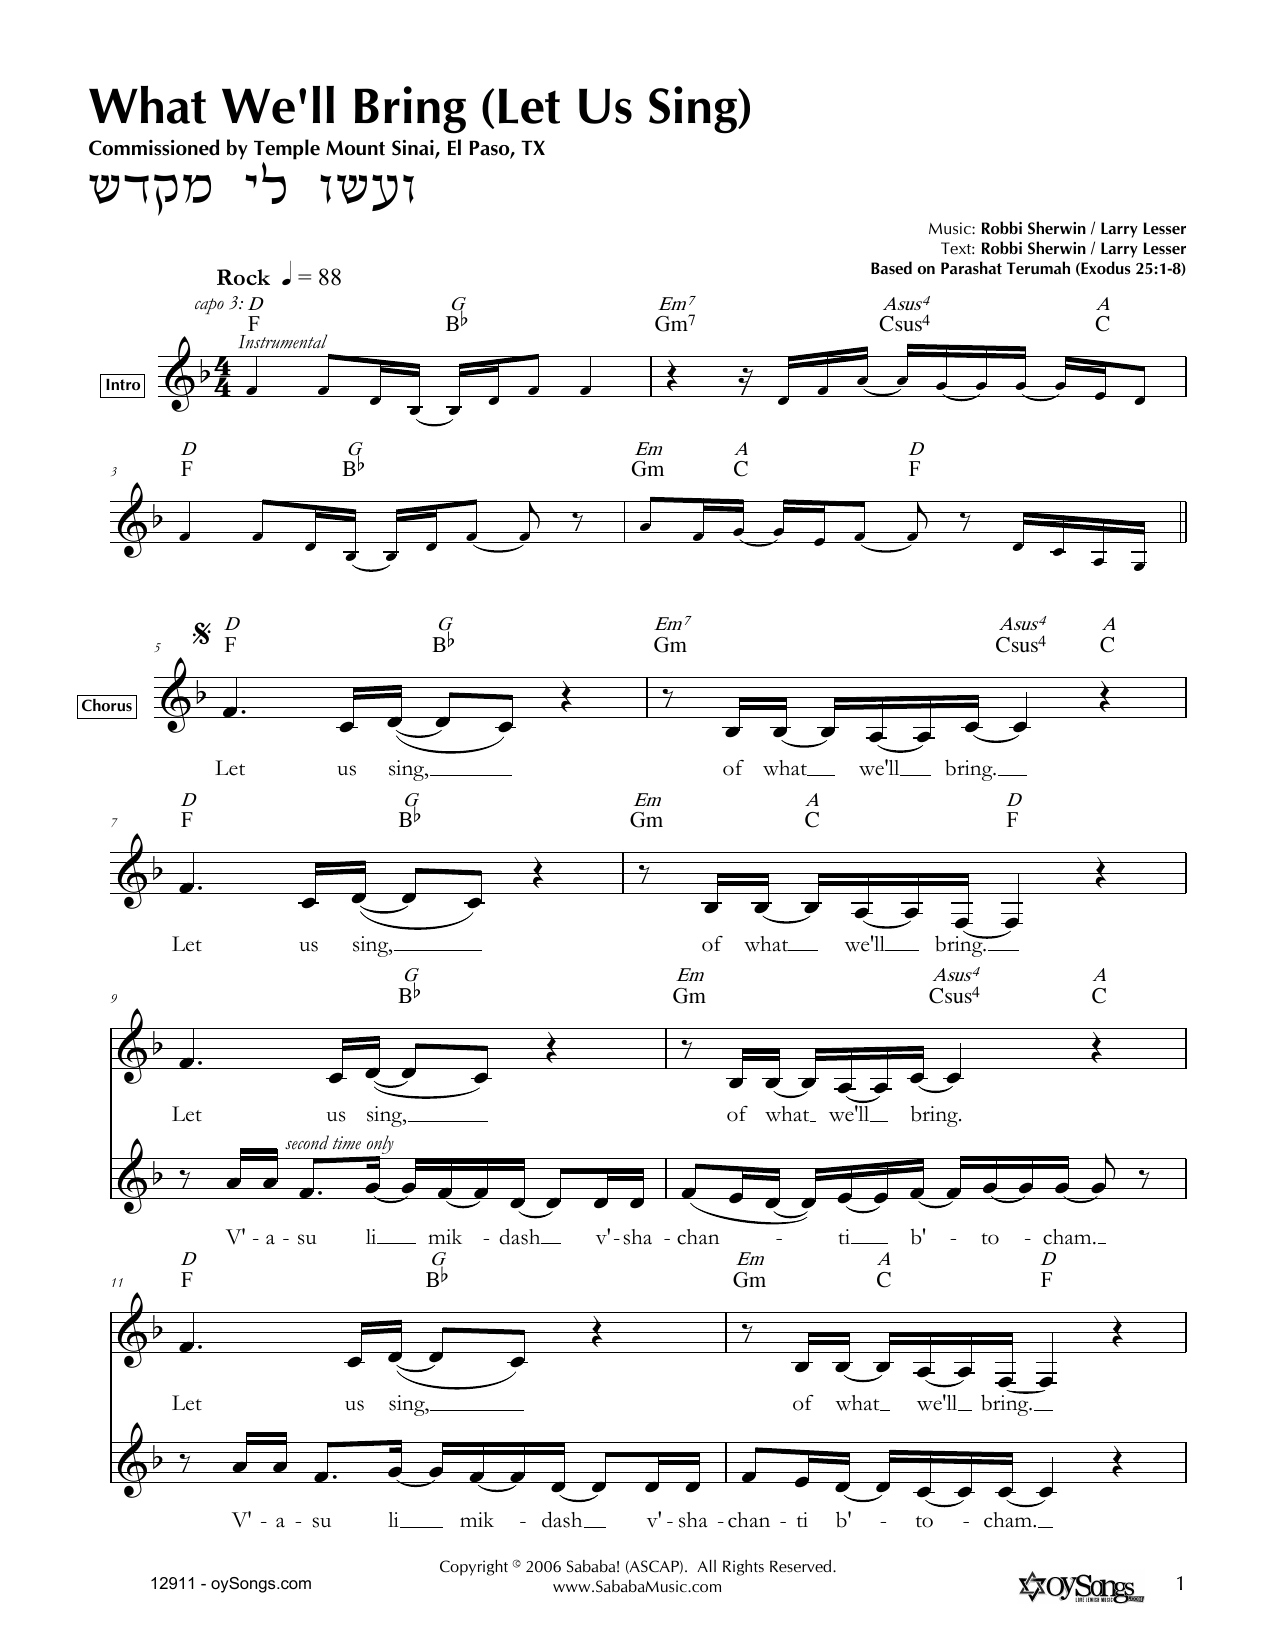 Robbi Sherwin What We'll Bring (Let Us Sing) Sheet Music Notes & Chords for Melody Line, Lyrics & Chords - Download or Print PDF